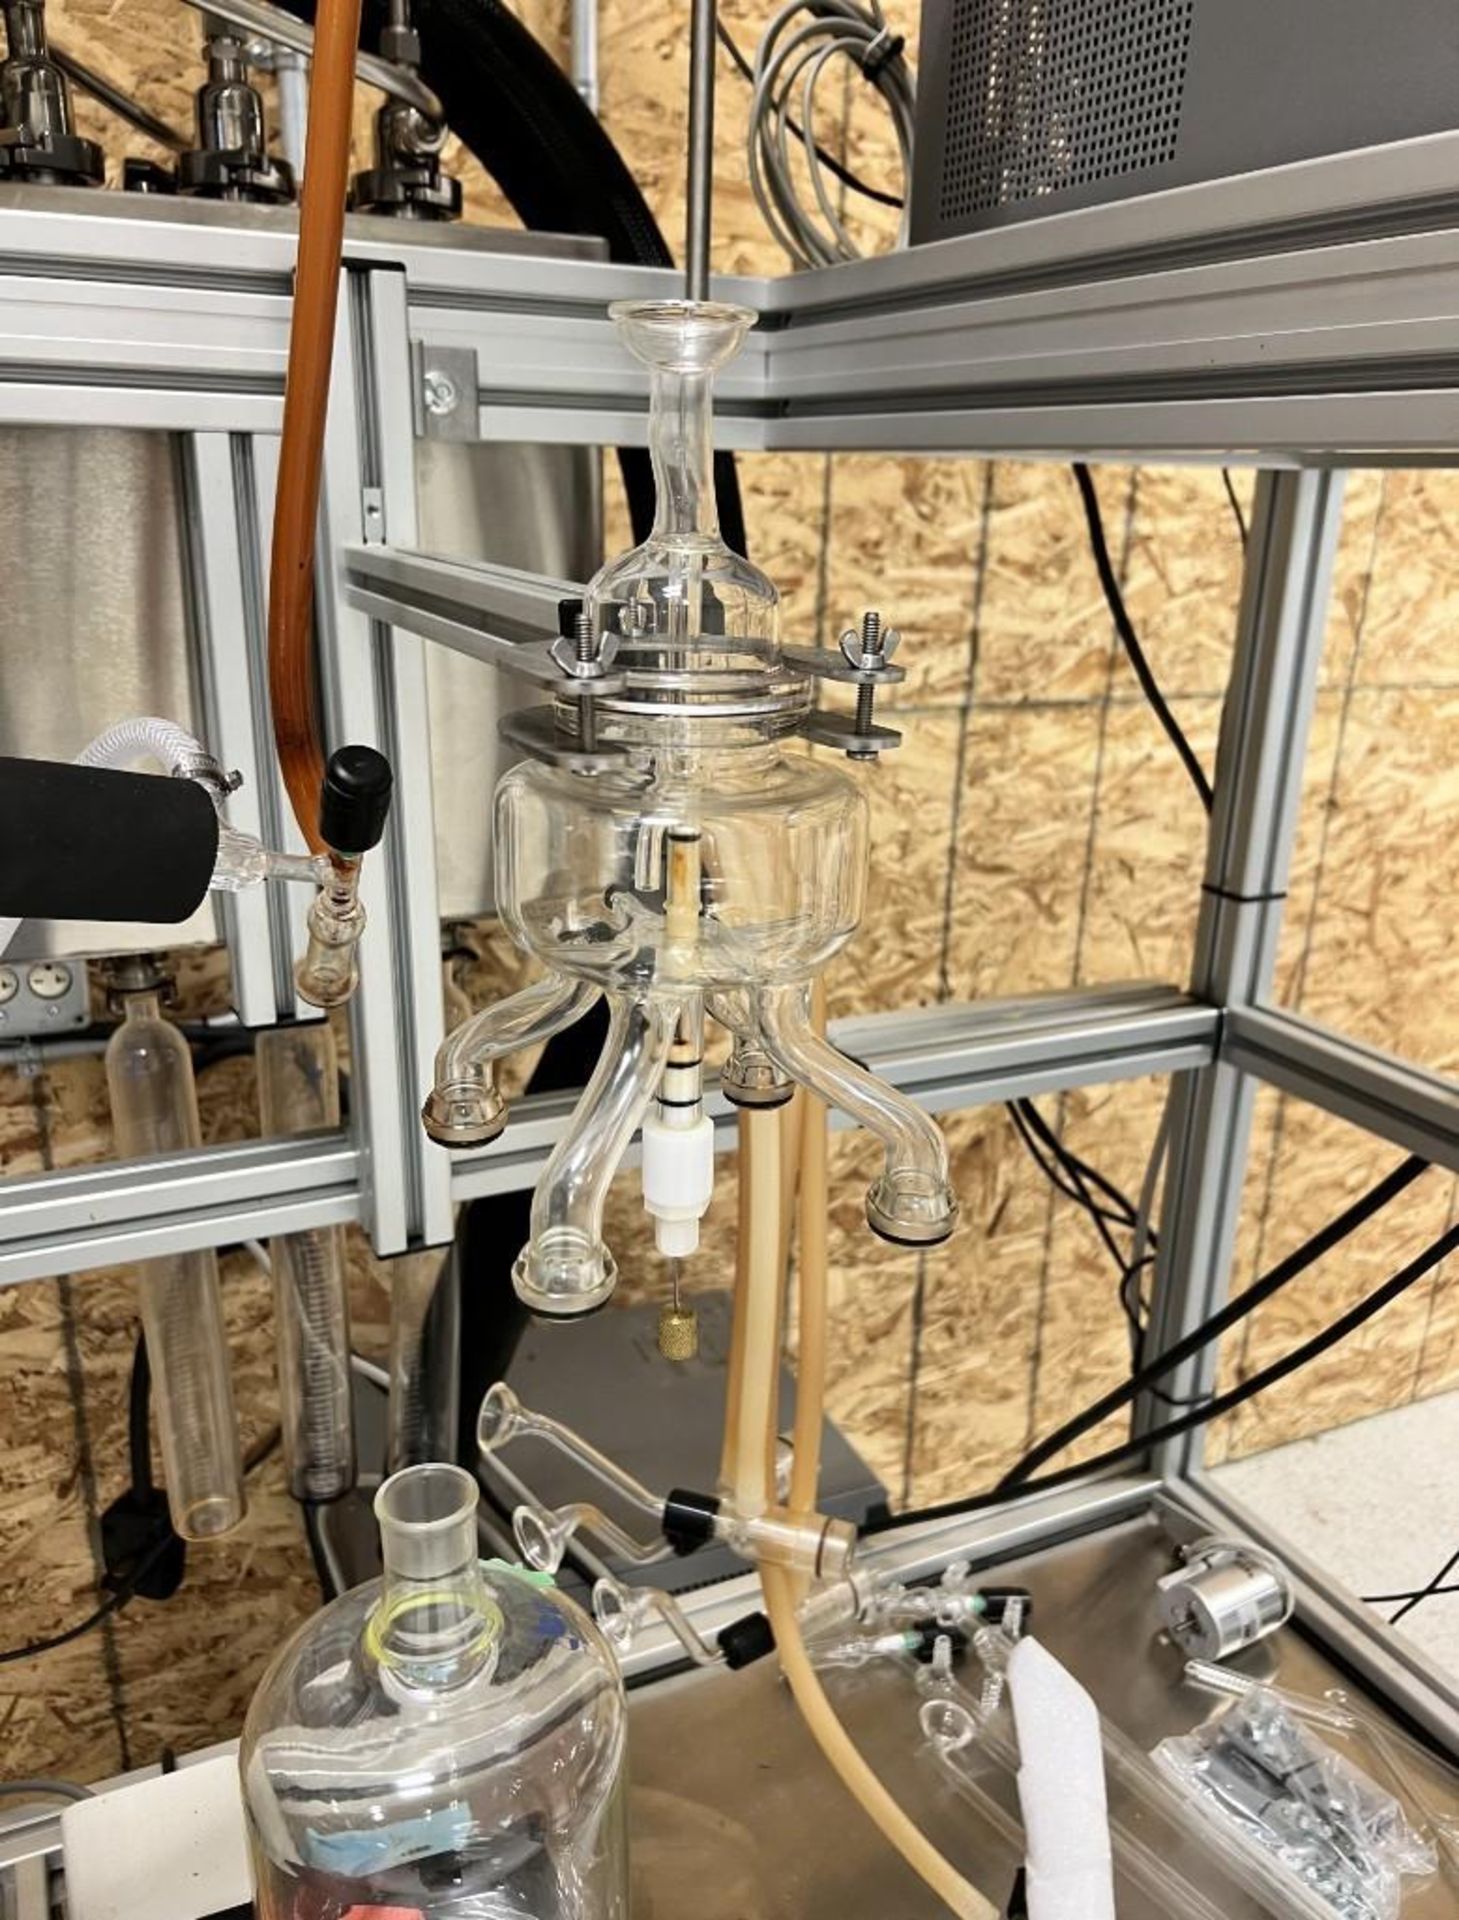 B/R Instruments Fractional Spinning Band Distillation System, Model 9200, Serial# 7284, Built 06/201 - Image 5 of 21